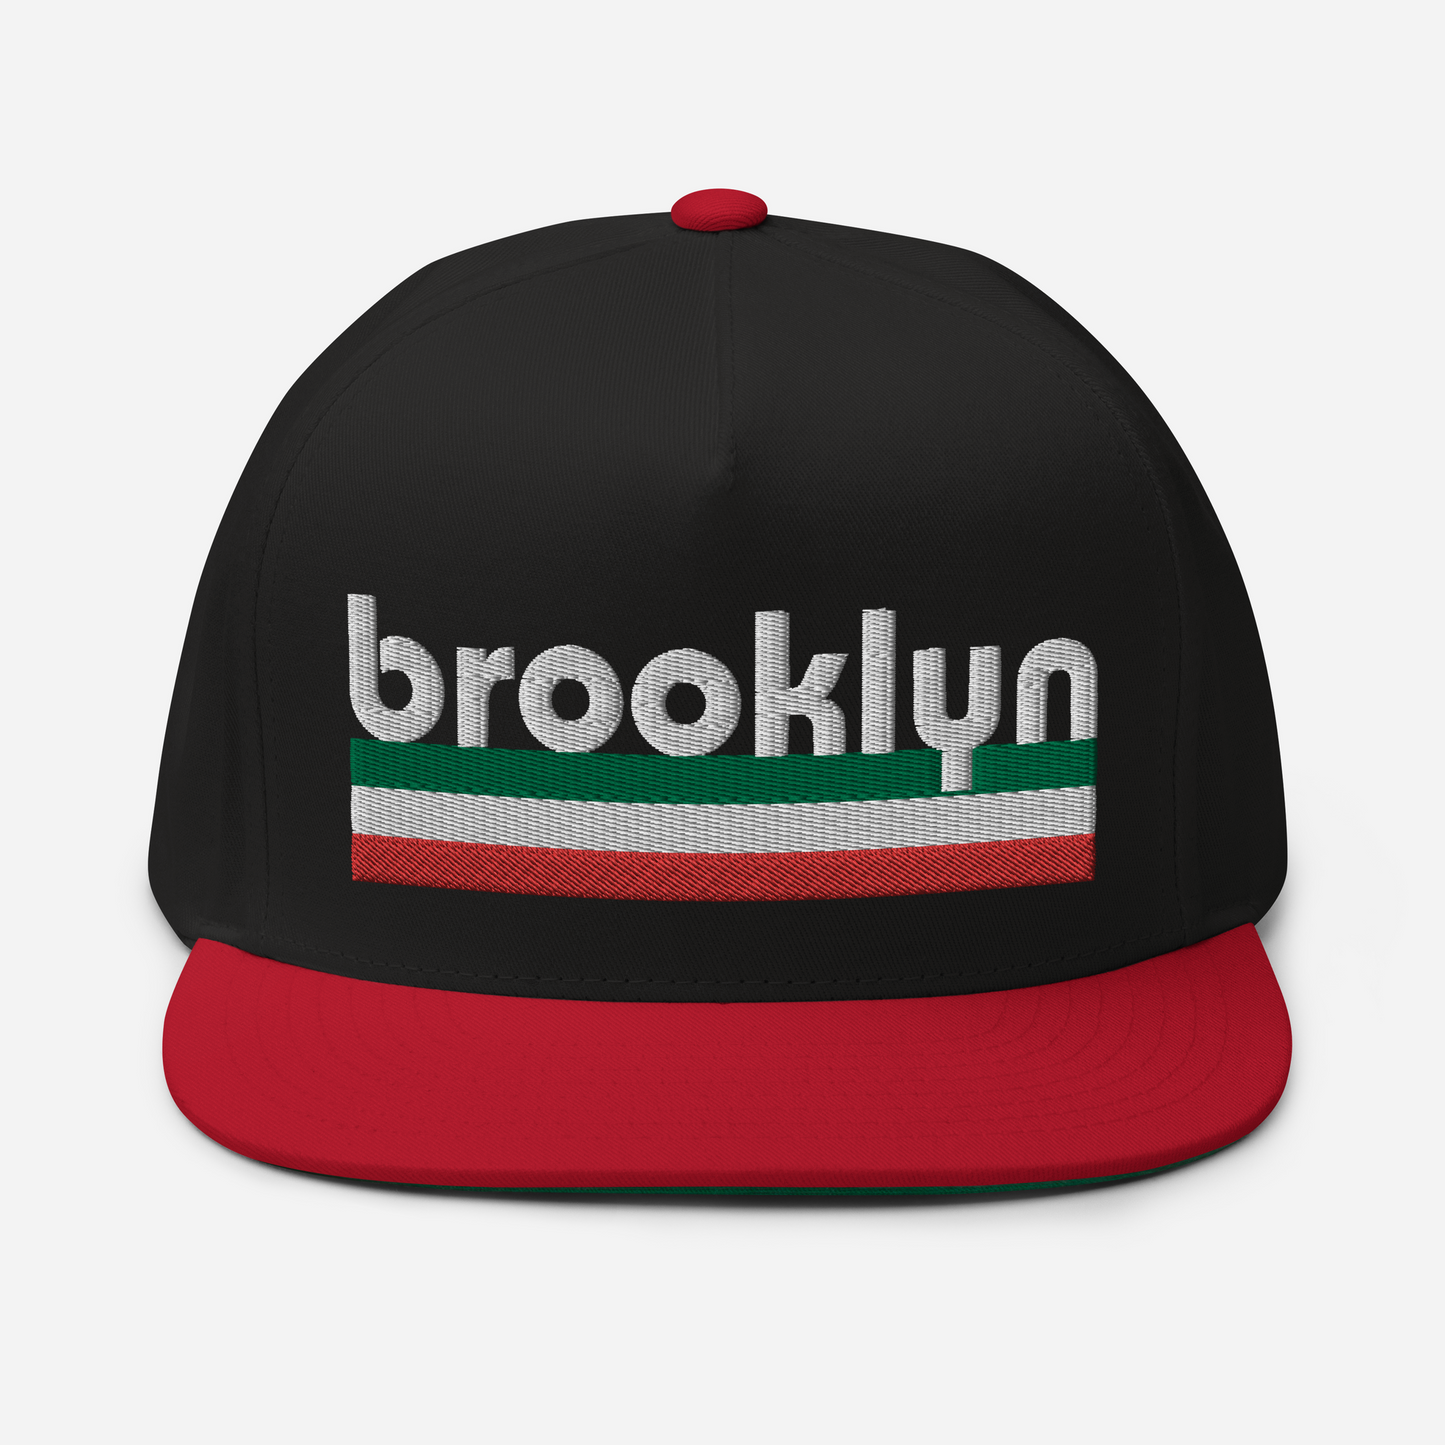 Brooklyn Italian Snapback Hat - Stylish Urban Headwear with Italian Flair